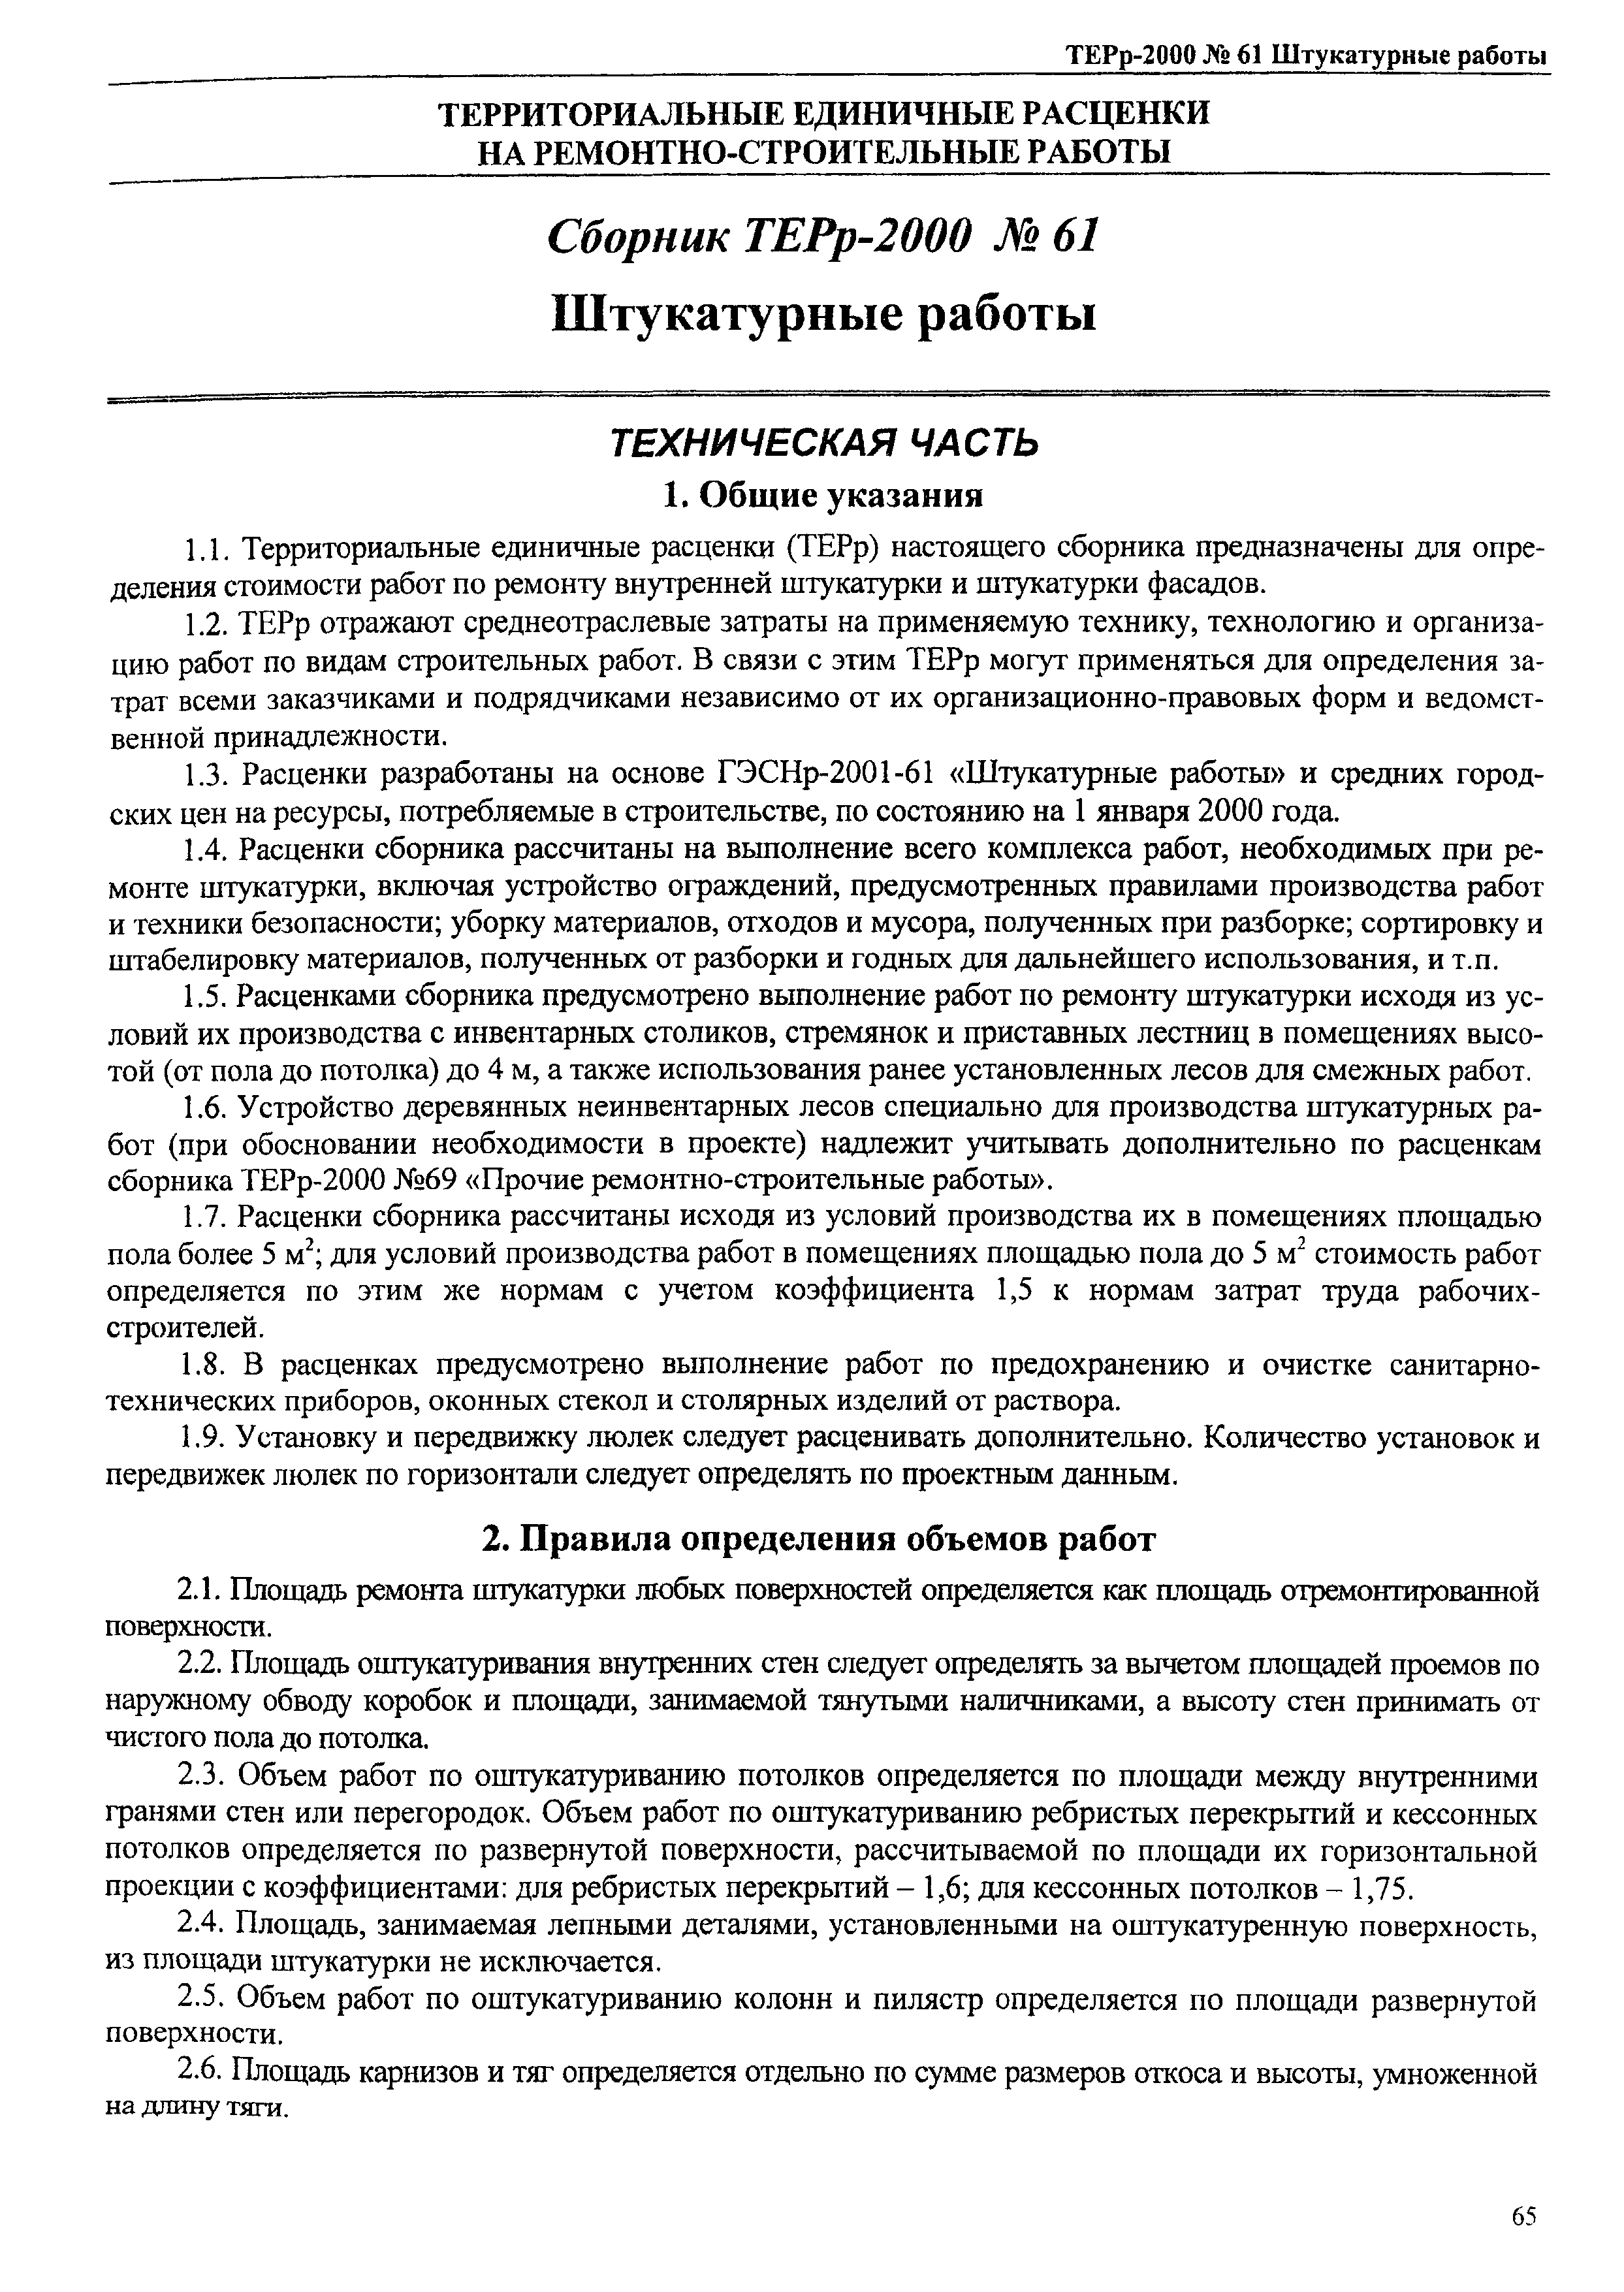 ТЕРр Омской области 2000-61